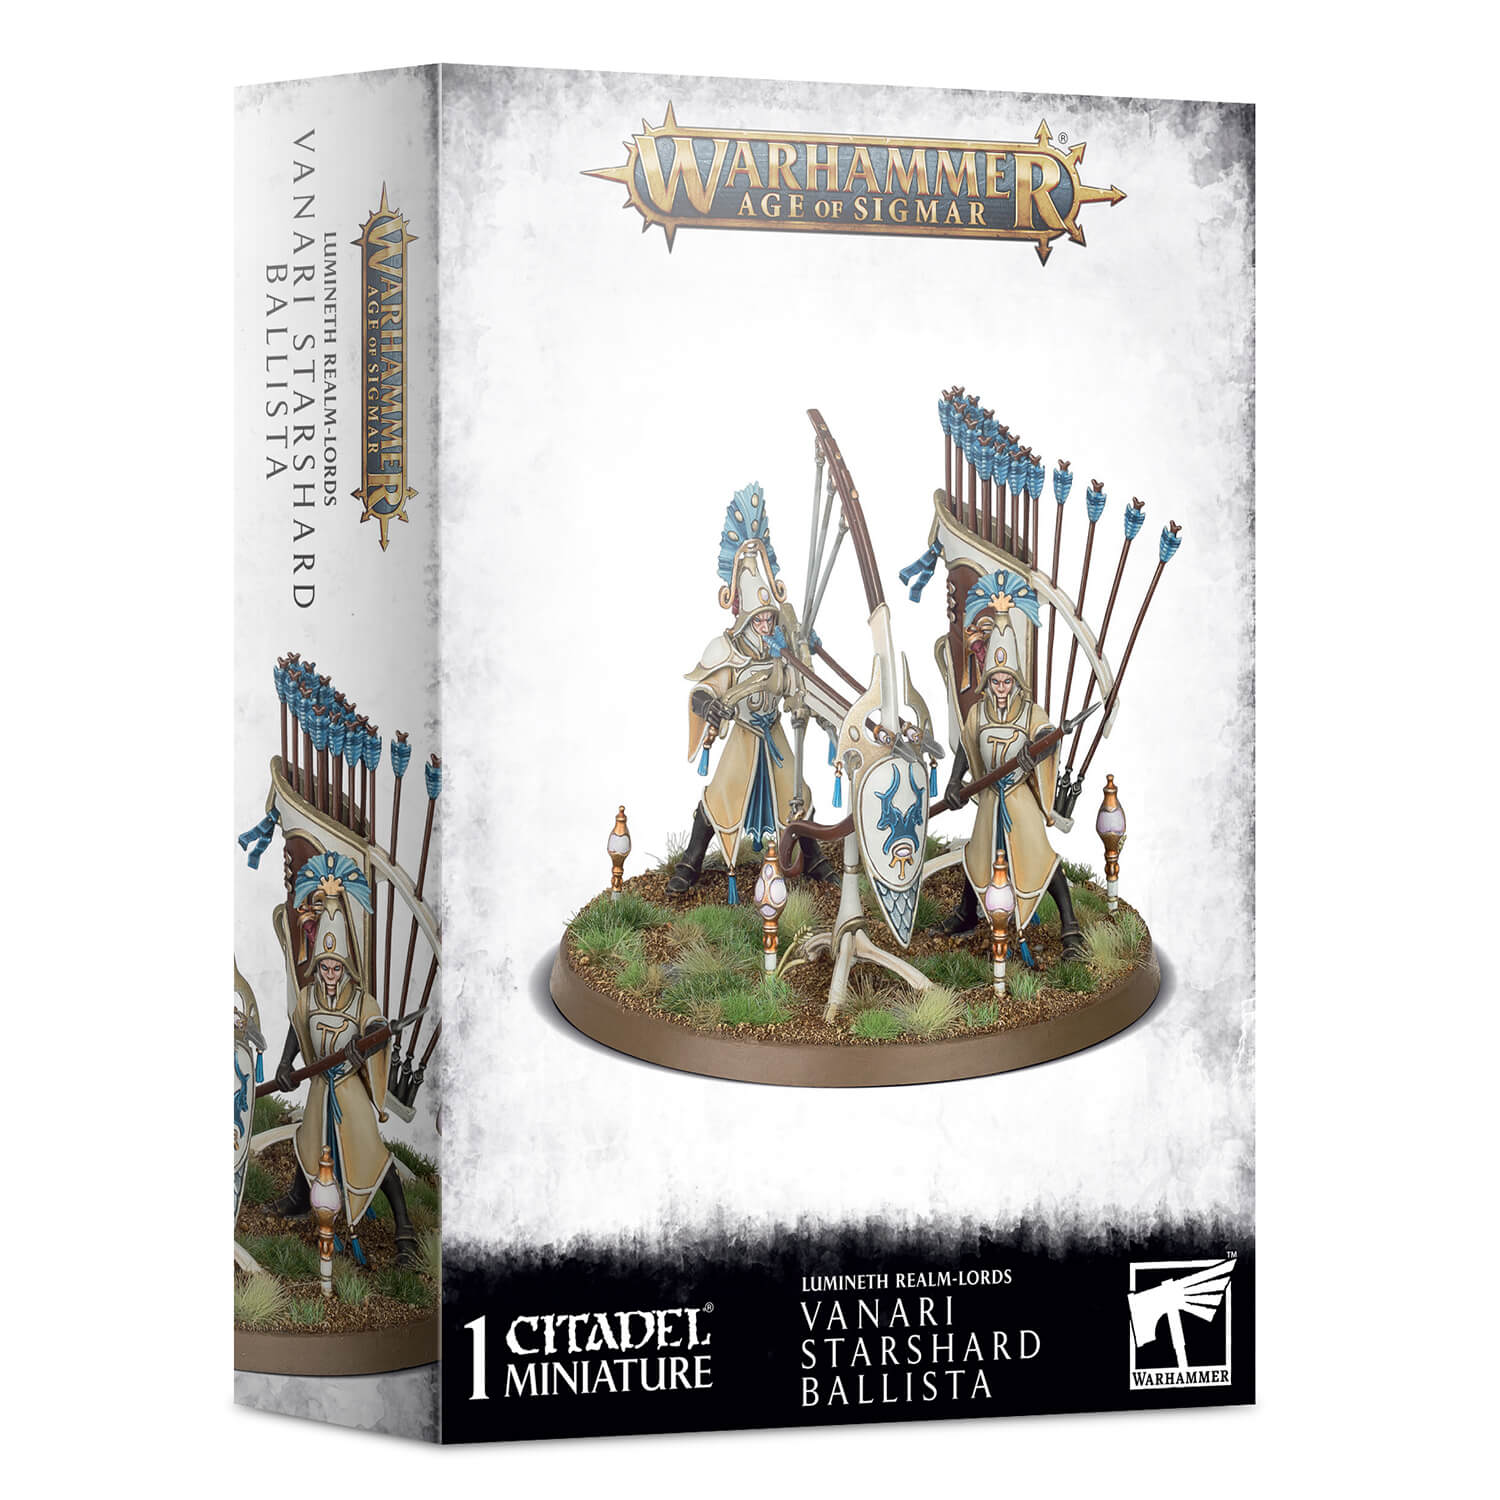 Warhammer Age of Sigmar Lumineth Realm-Lords Vanari Starshard Ballista Miniature